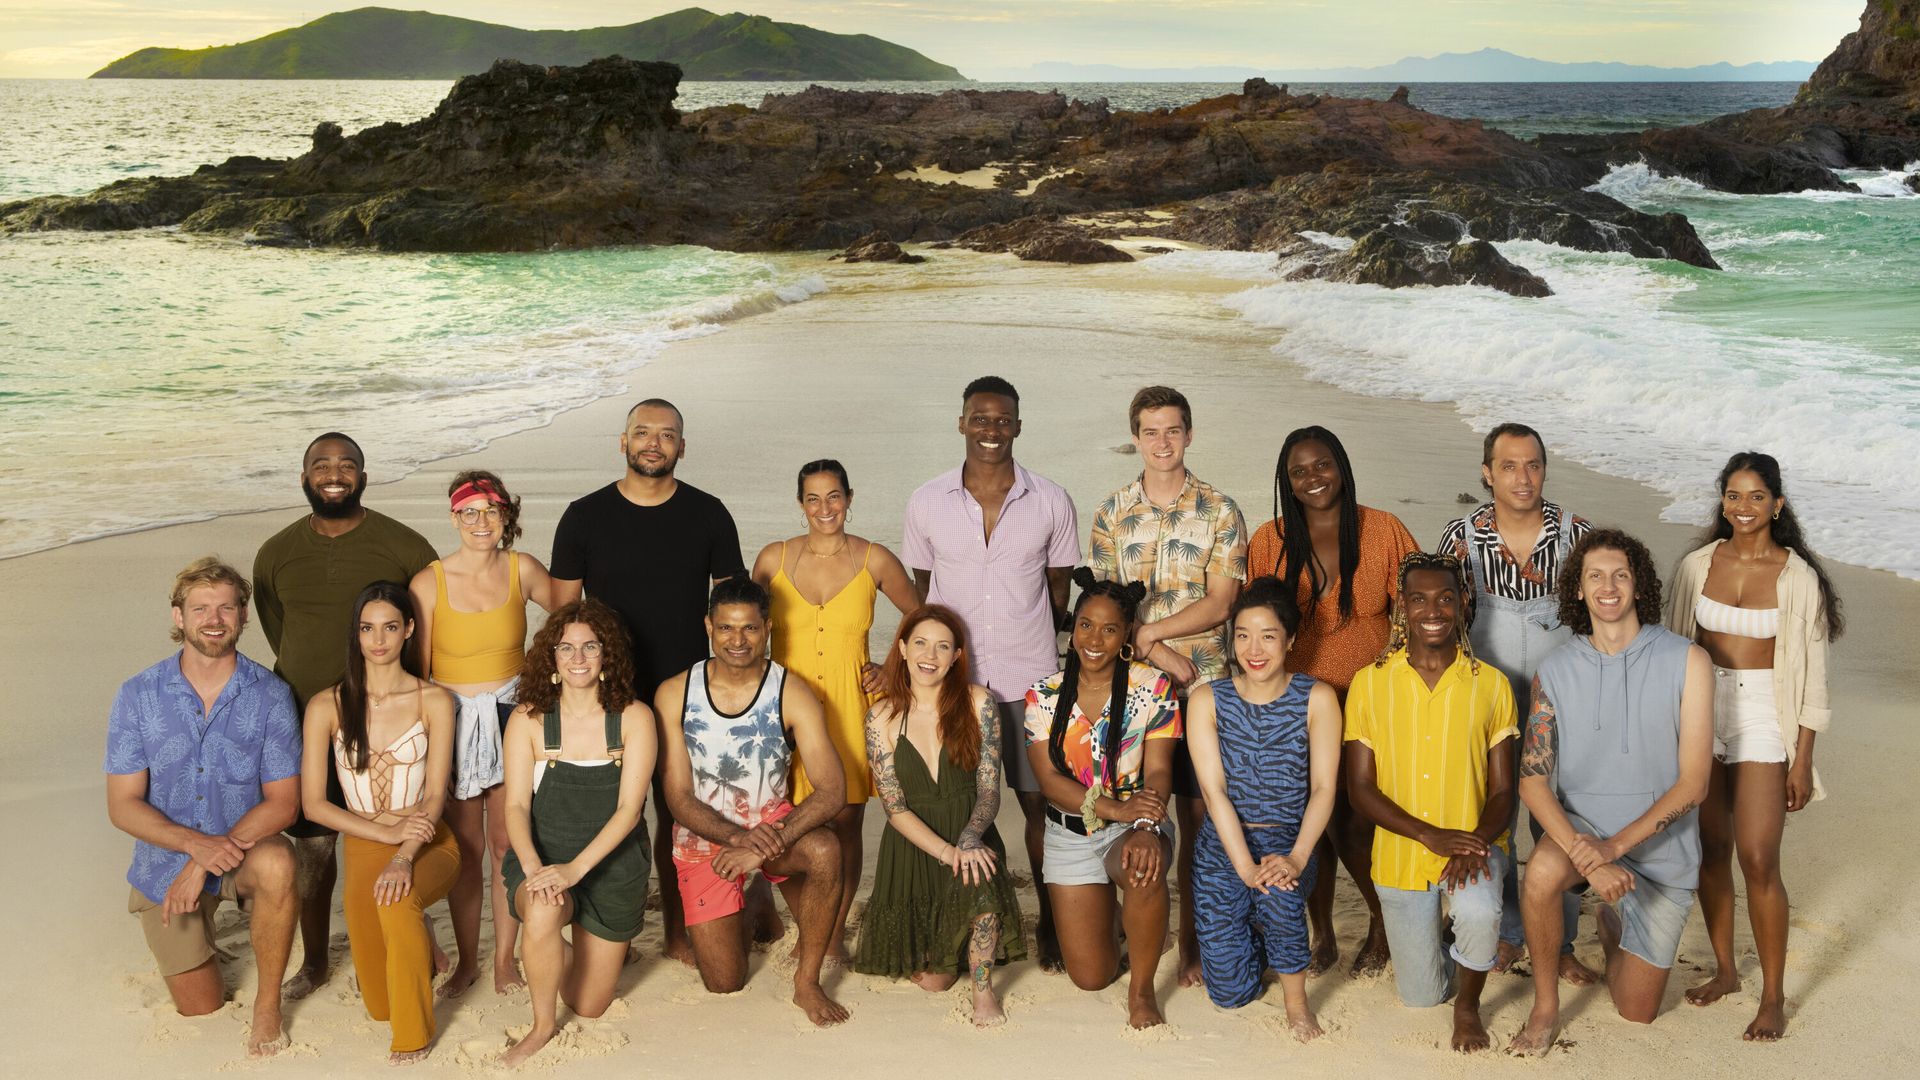 survivor contestants on a beach